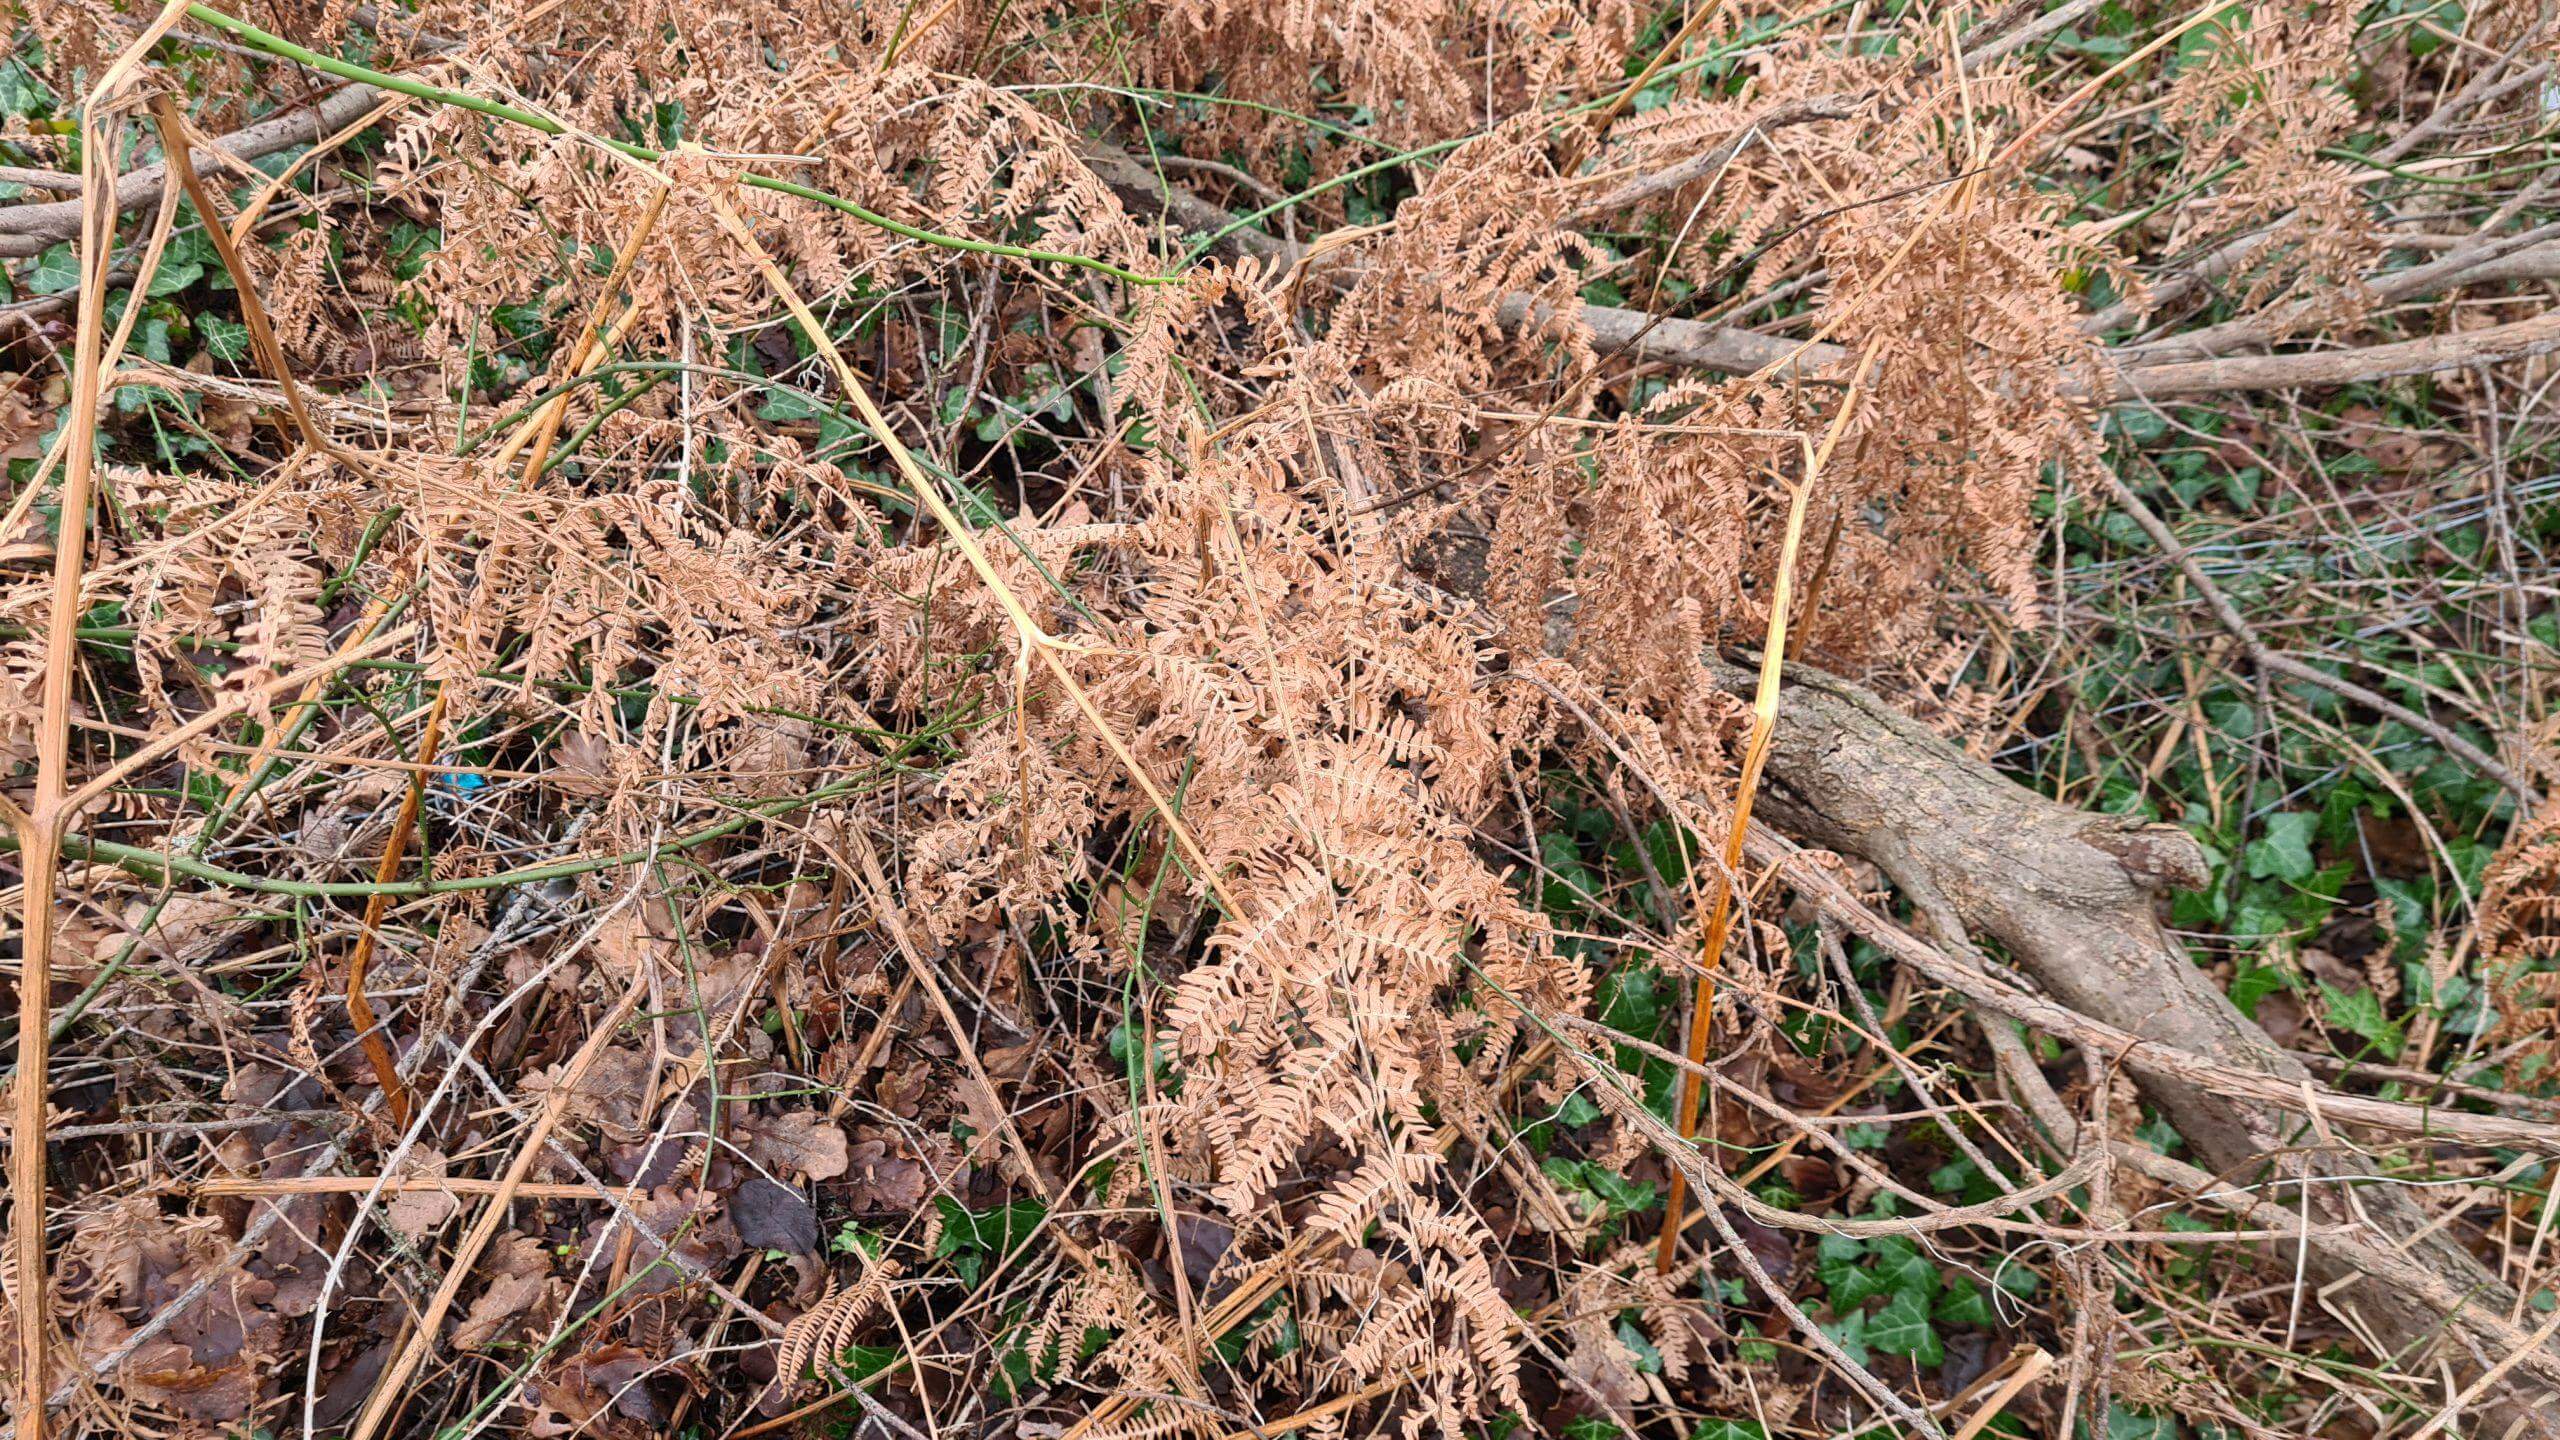 Ferns densely cover wasteland